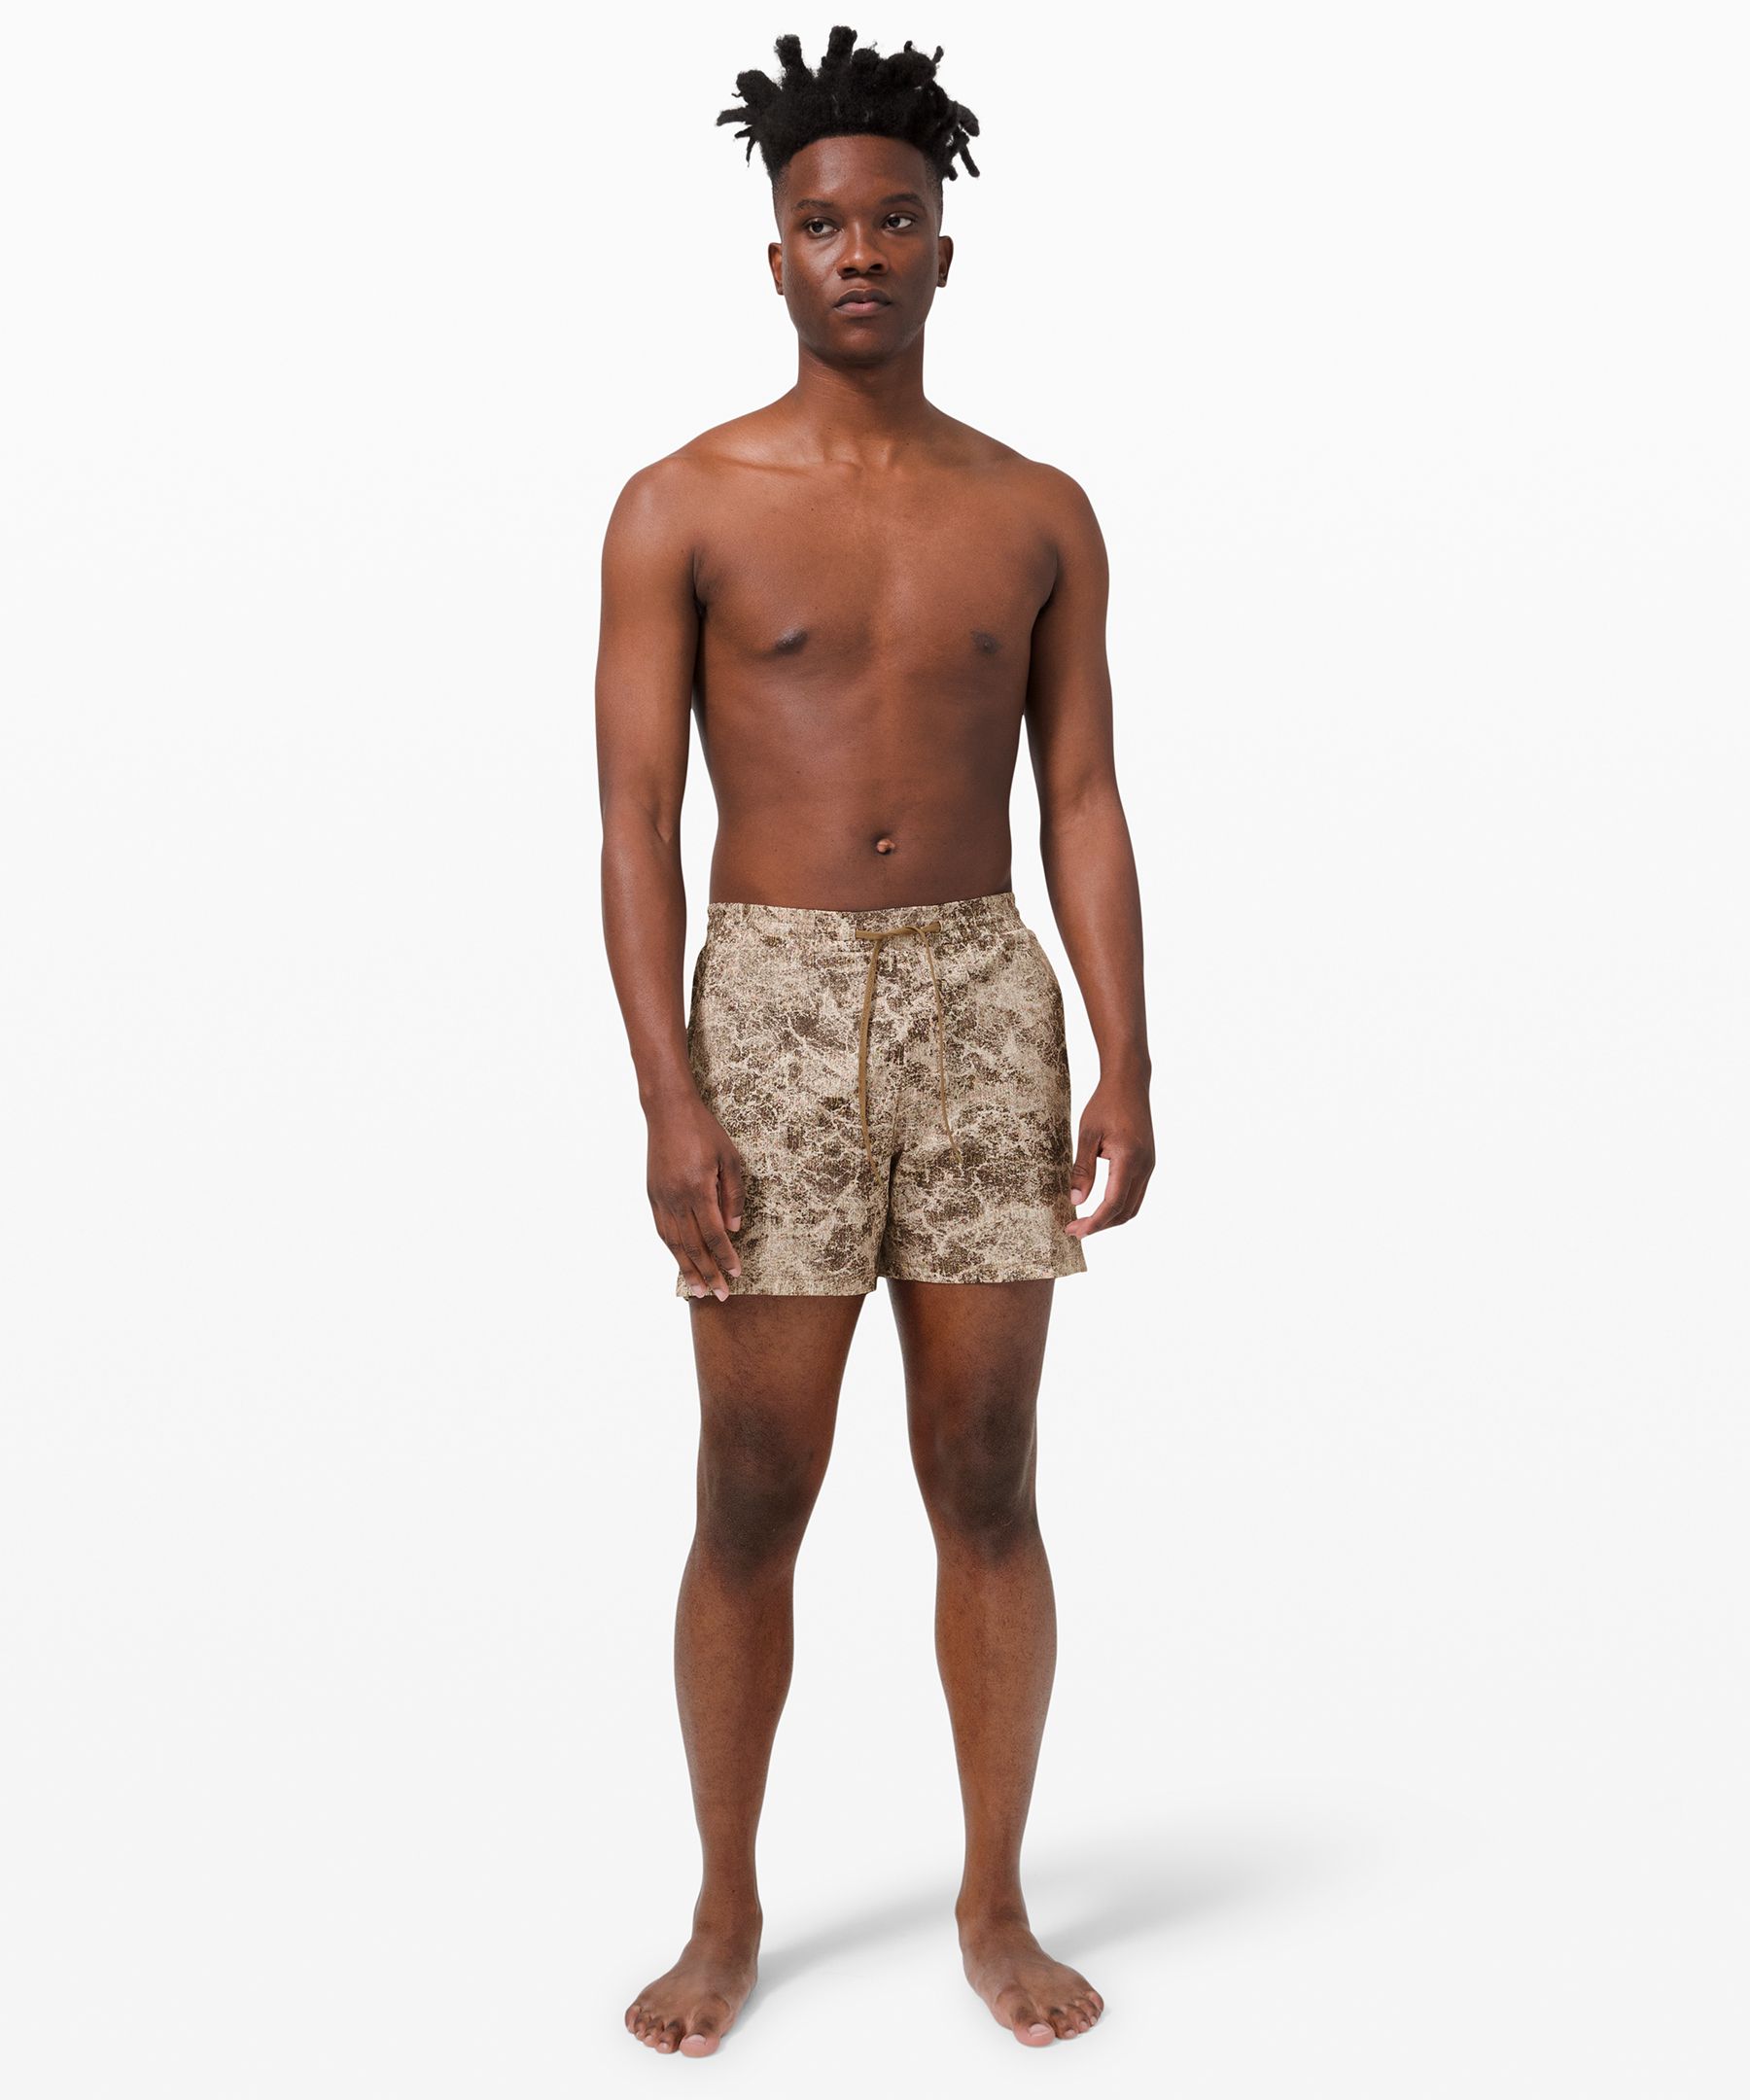 swimming in lululemon shorts